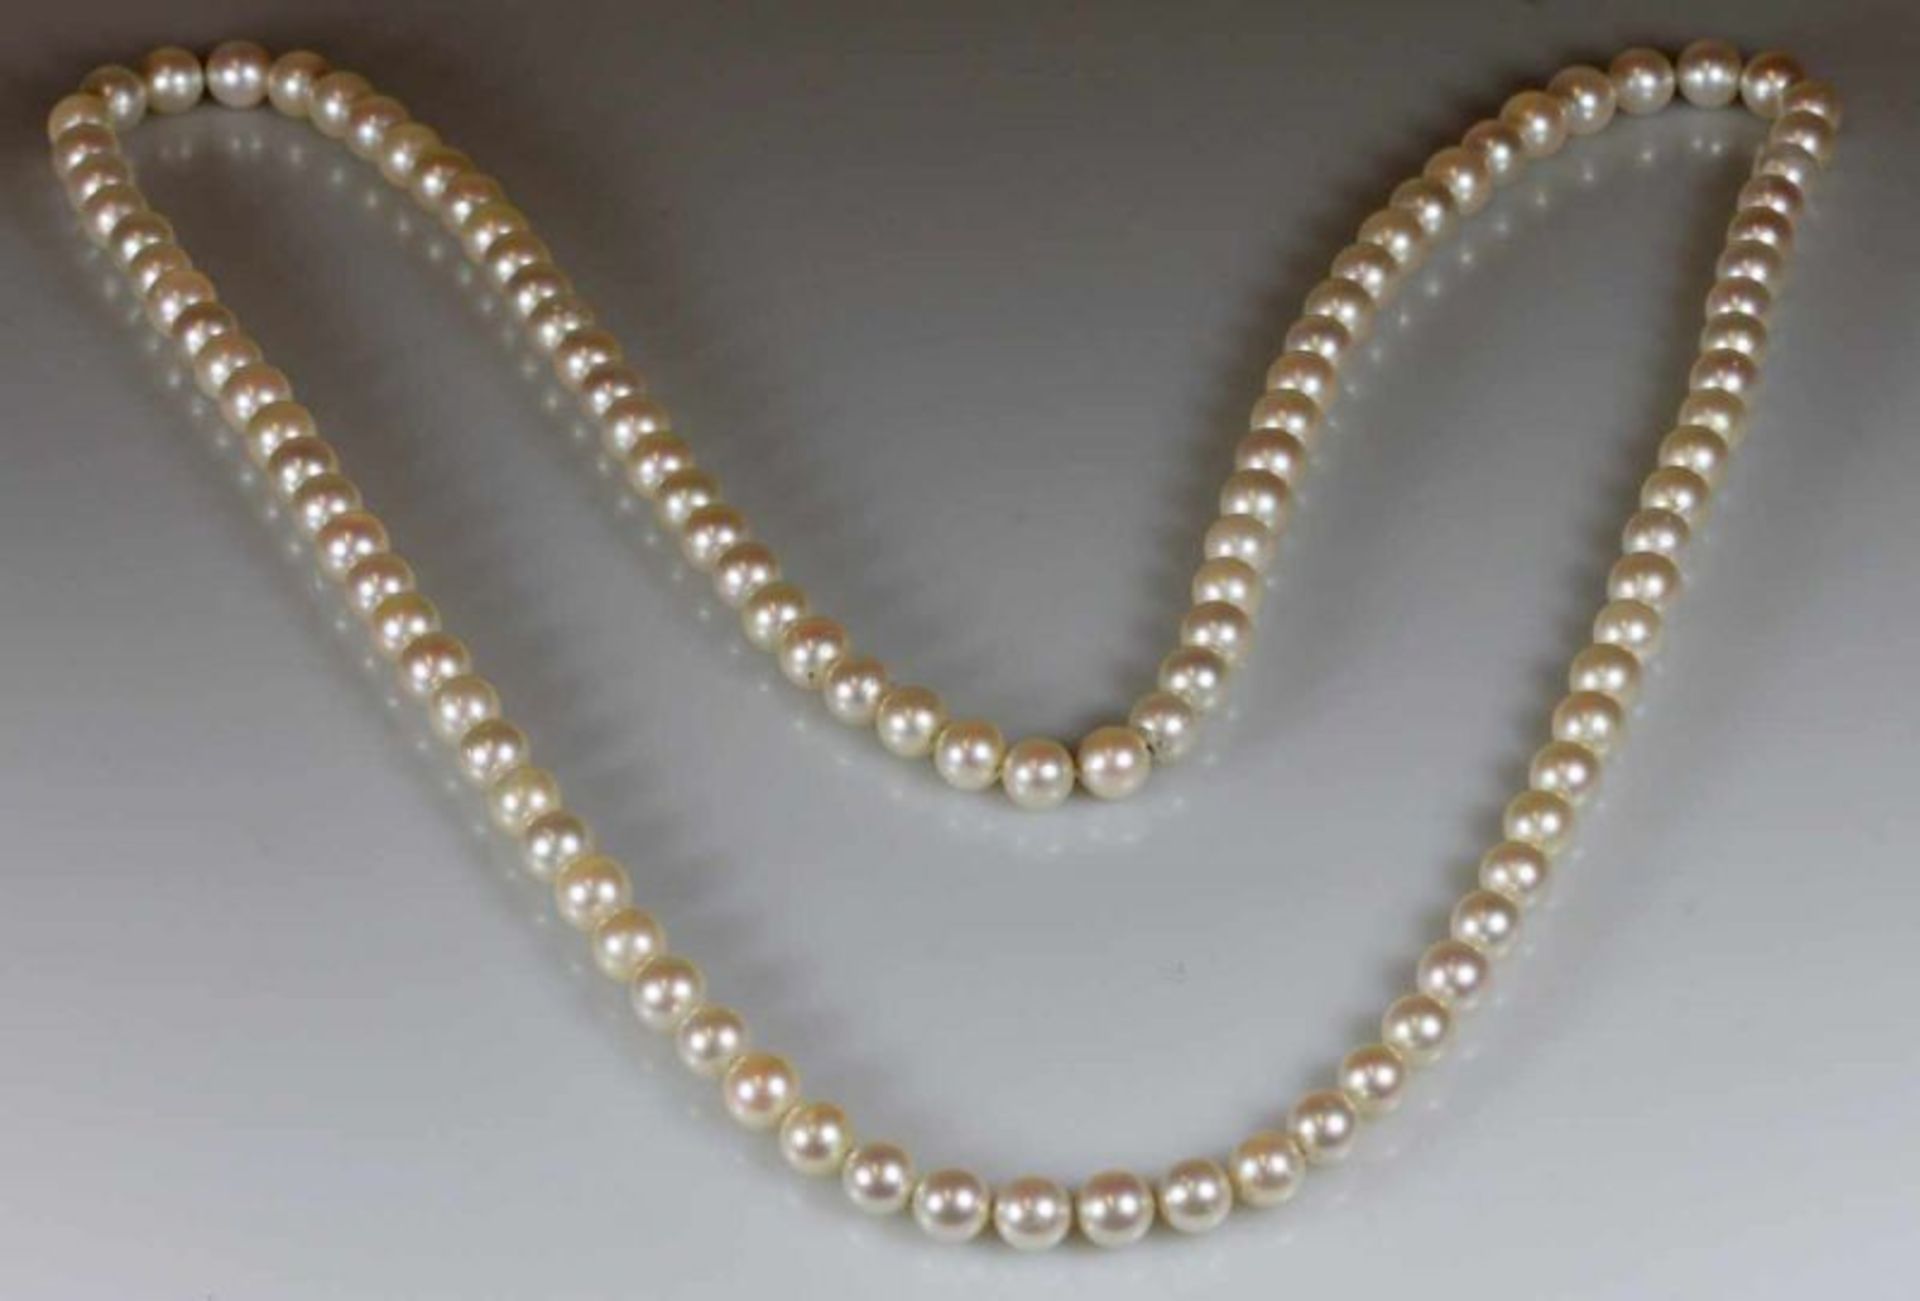 Perlenkette, endlos, 106 Akoya-Zuchtperlen ø ca. 7.5 mm, 85 cm lang 25.00 % buyer's premium on the